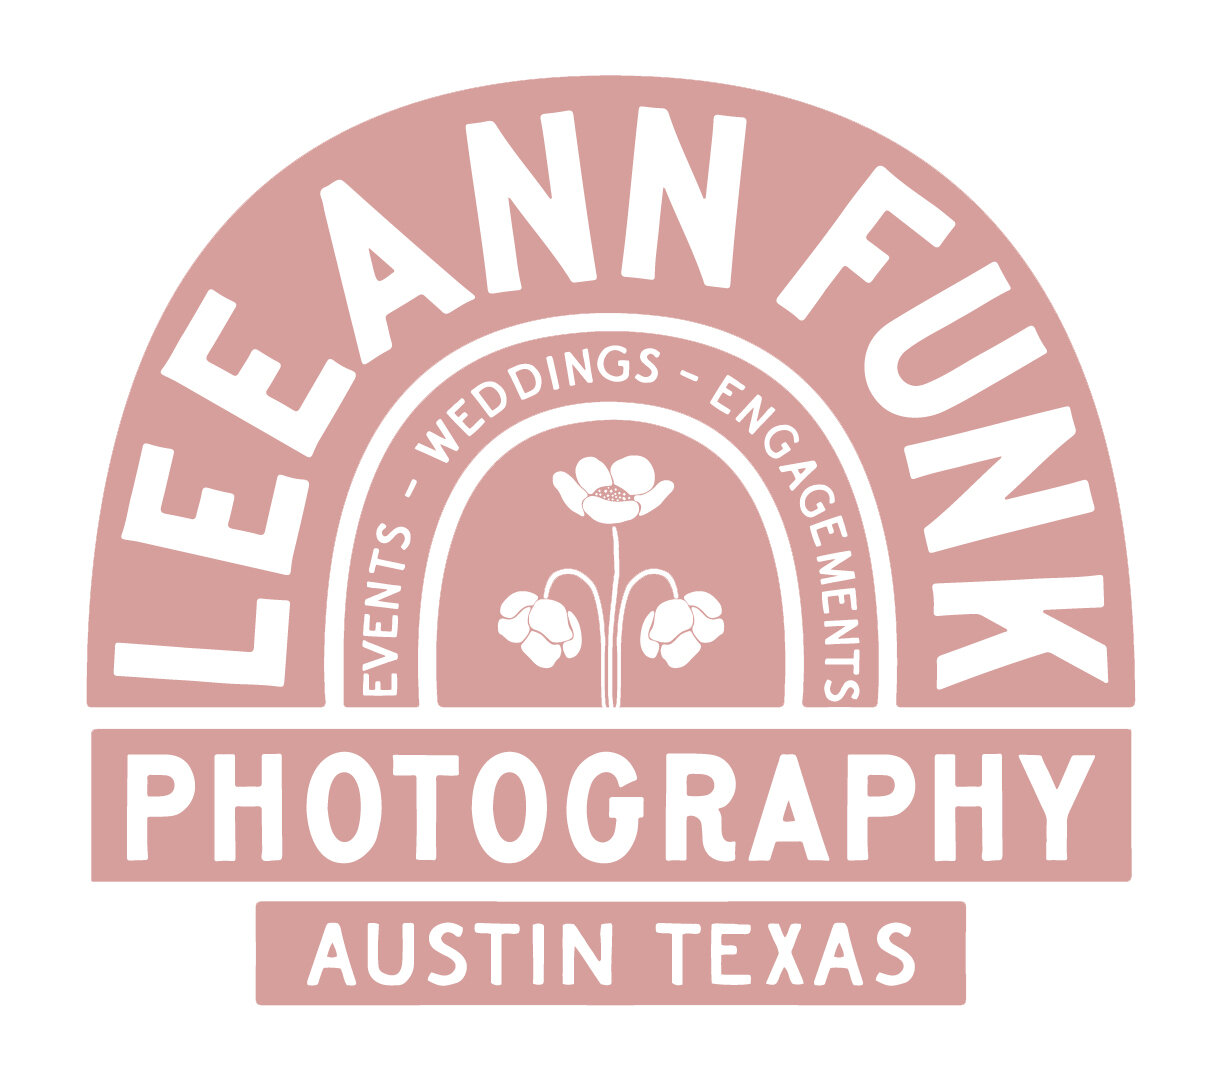 Leeann Funk Photography